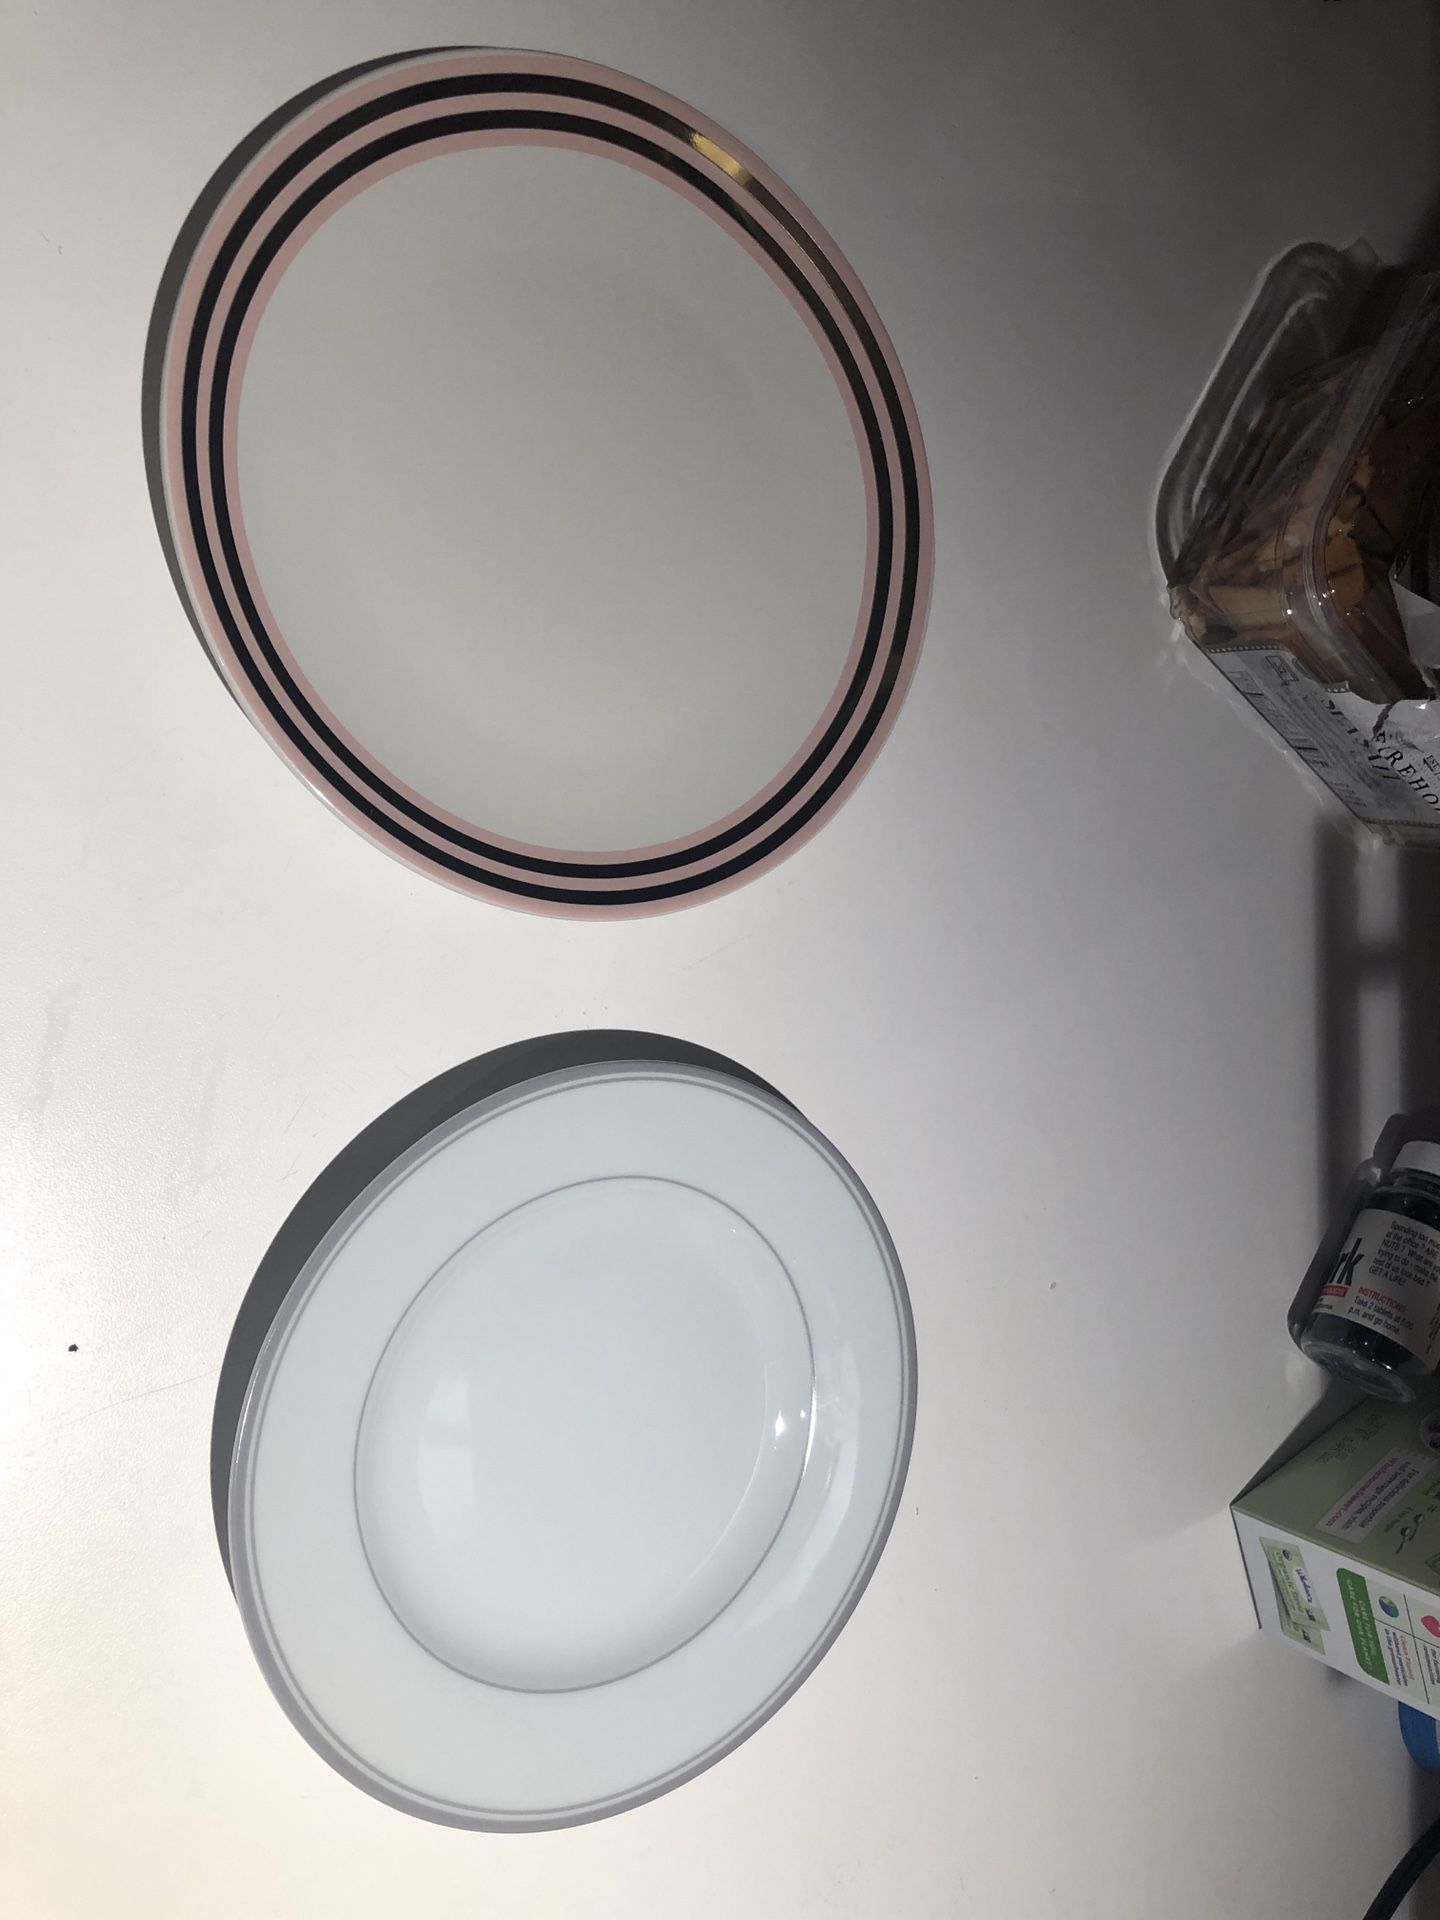 Set of dinnerware - $30